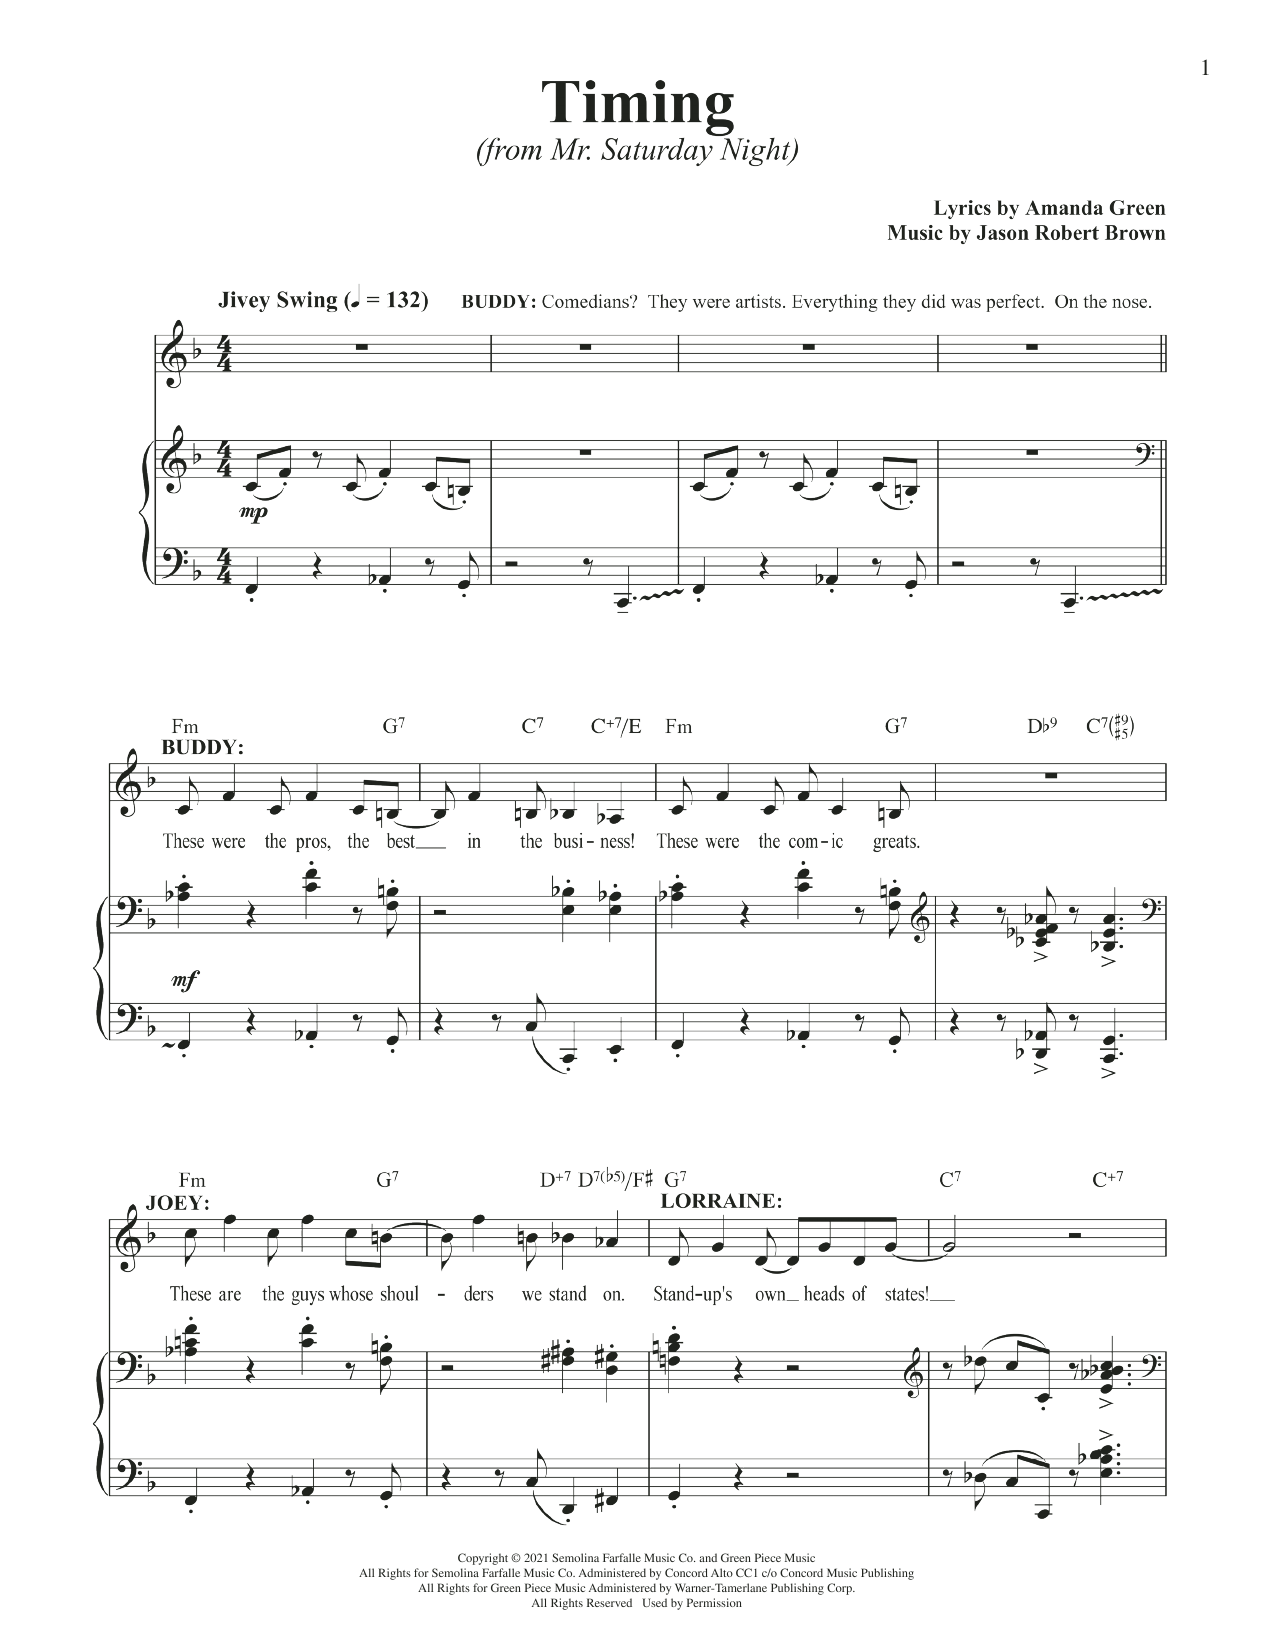 Jason Robert Brown and Amanda Green Timing (from Mr. Saturday Night) sheet music notes printable PDF score